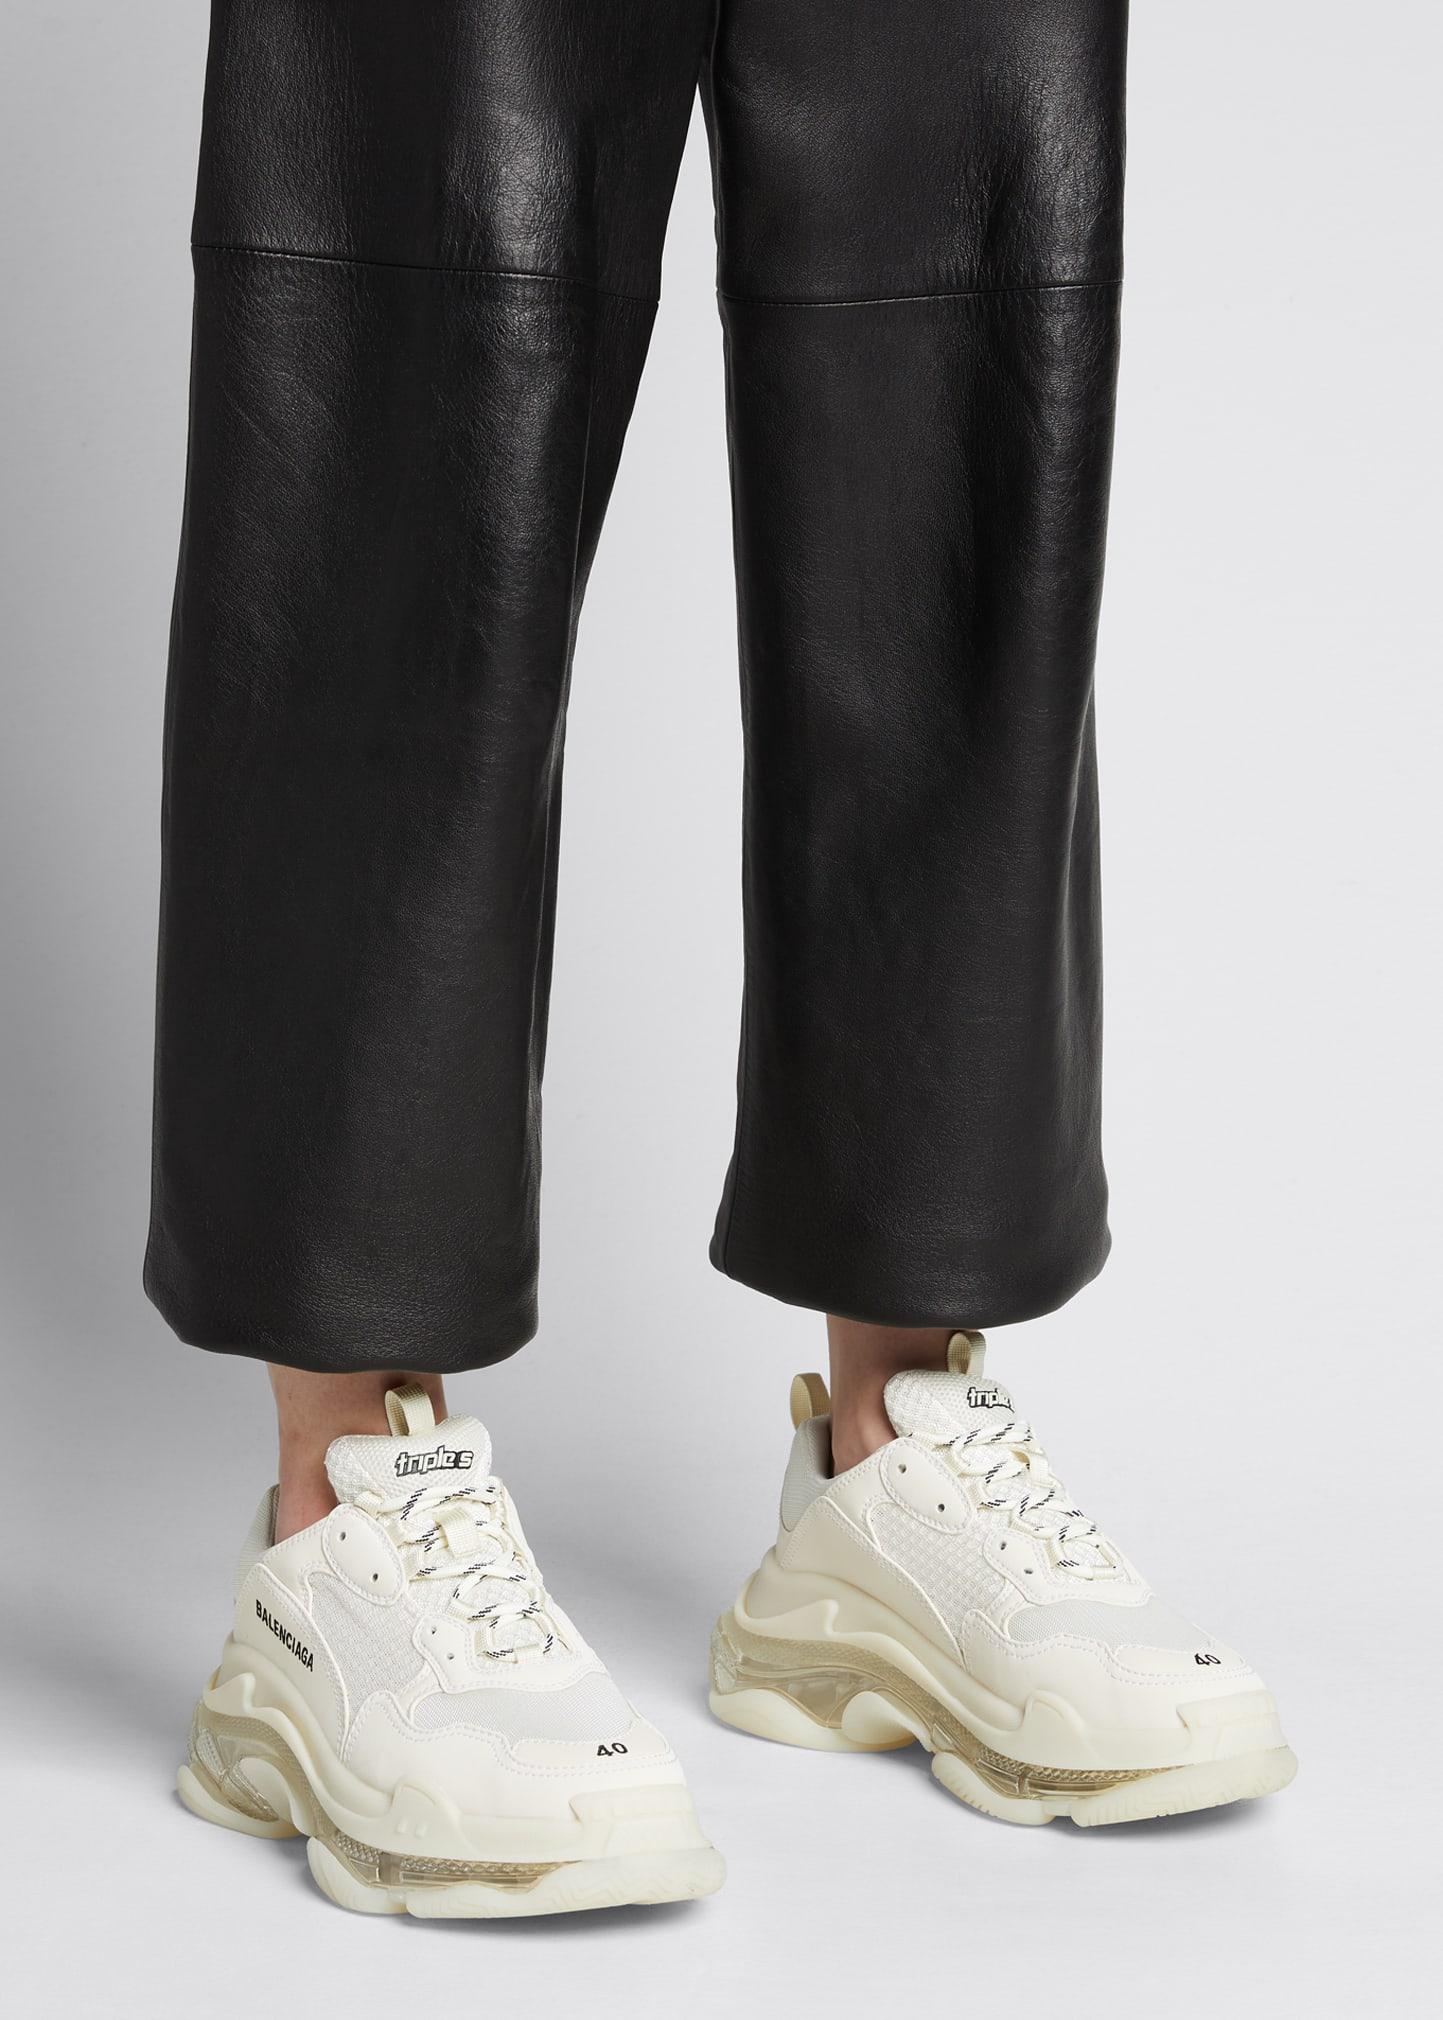 Balenciaga Triple S Air Nylon Sneakers in White | Lyst